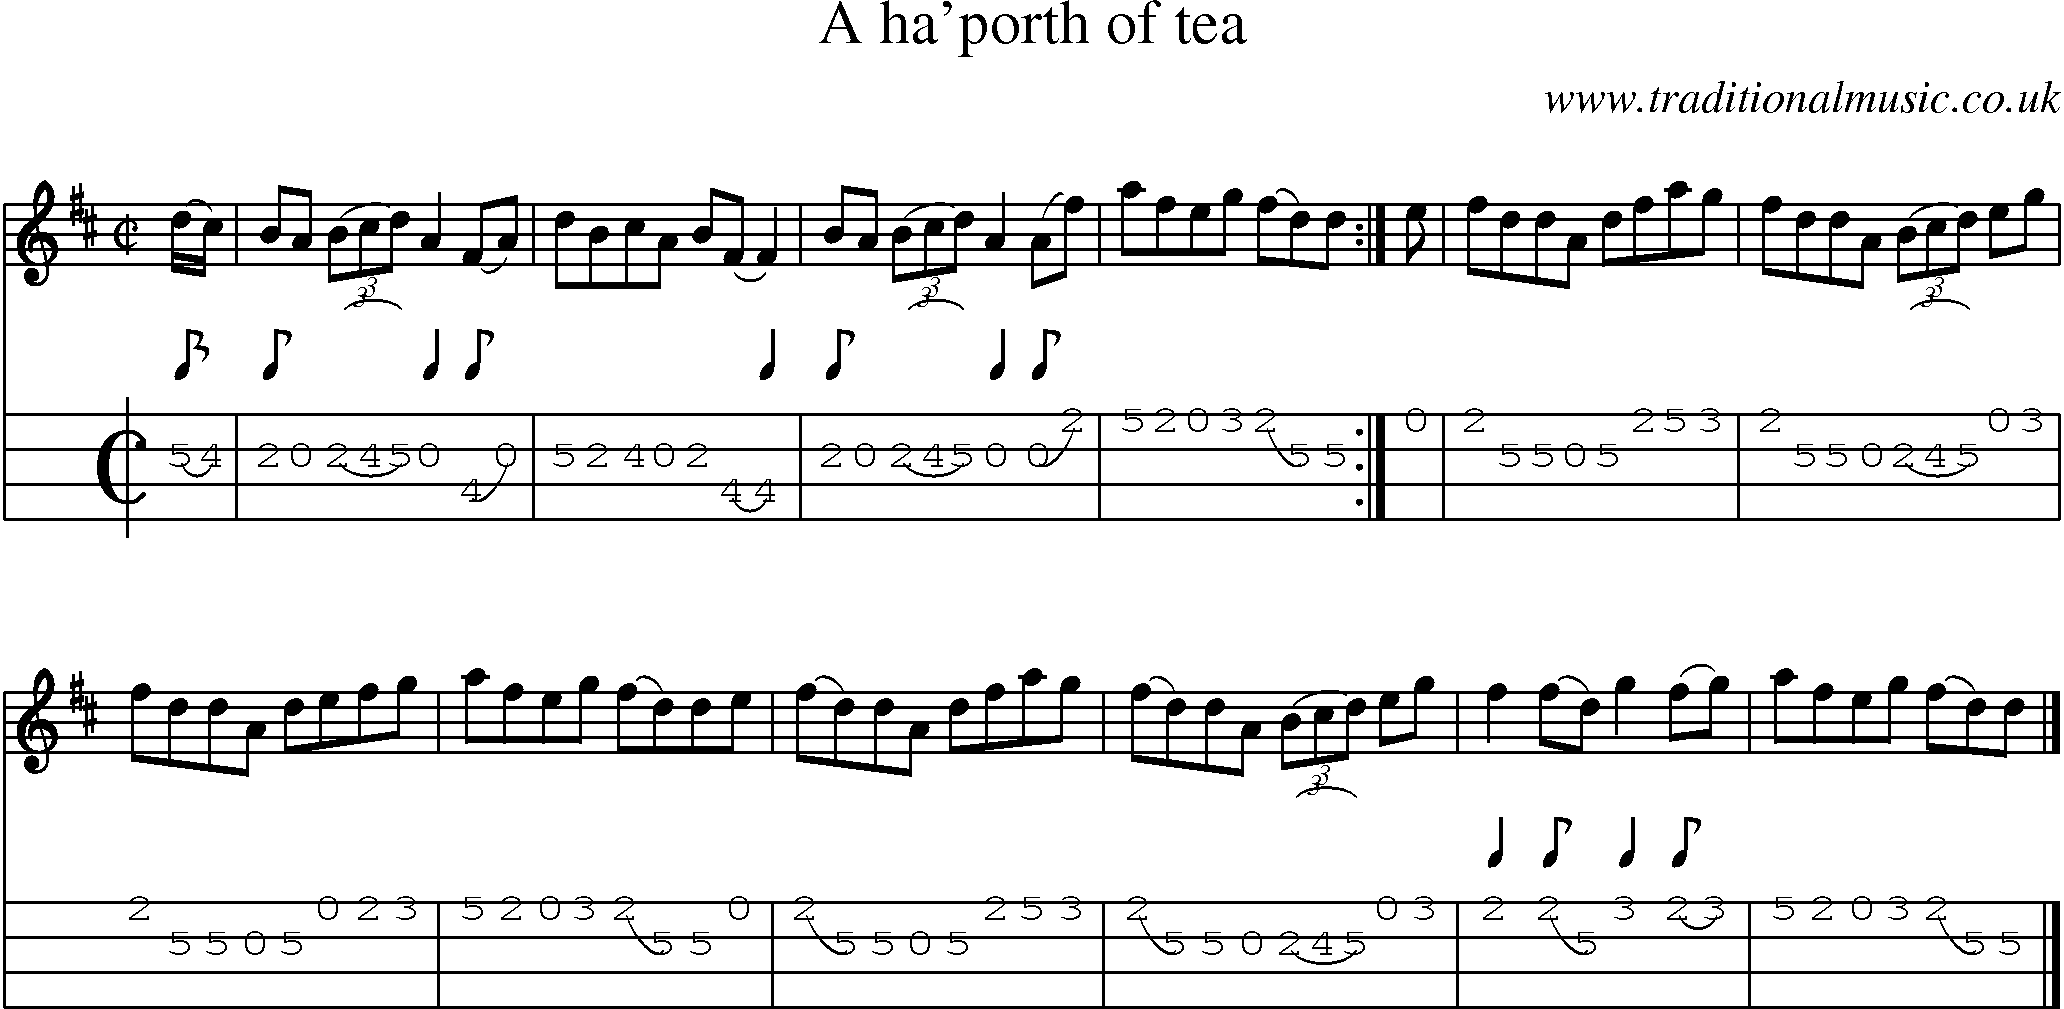 Music Score and Mandolin Tabs for Haporth Of Tea